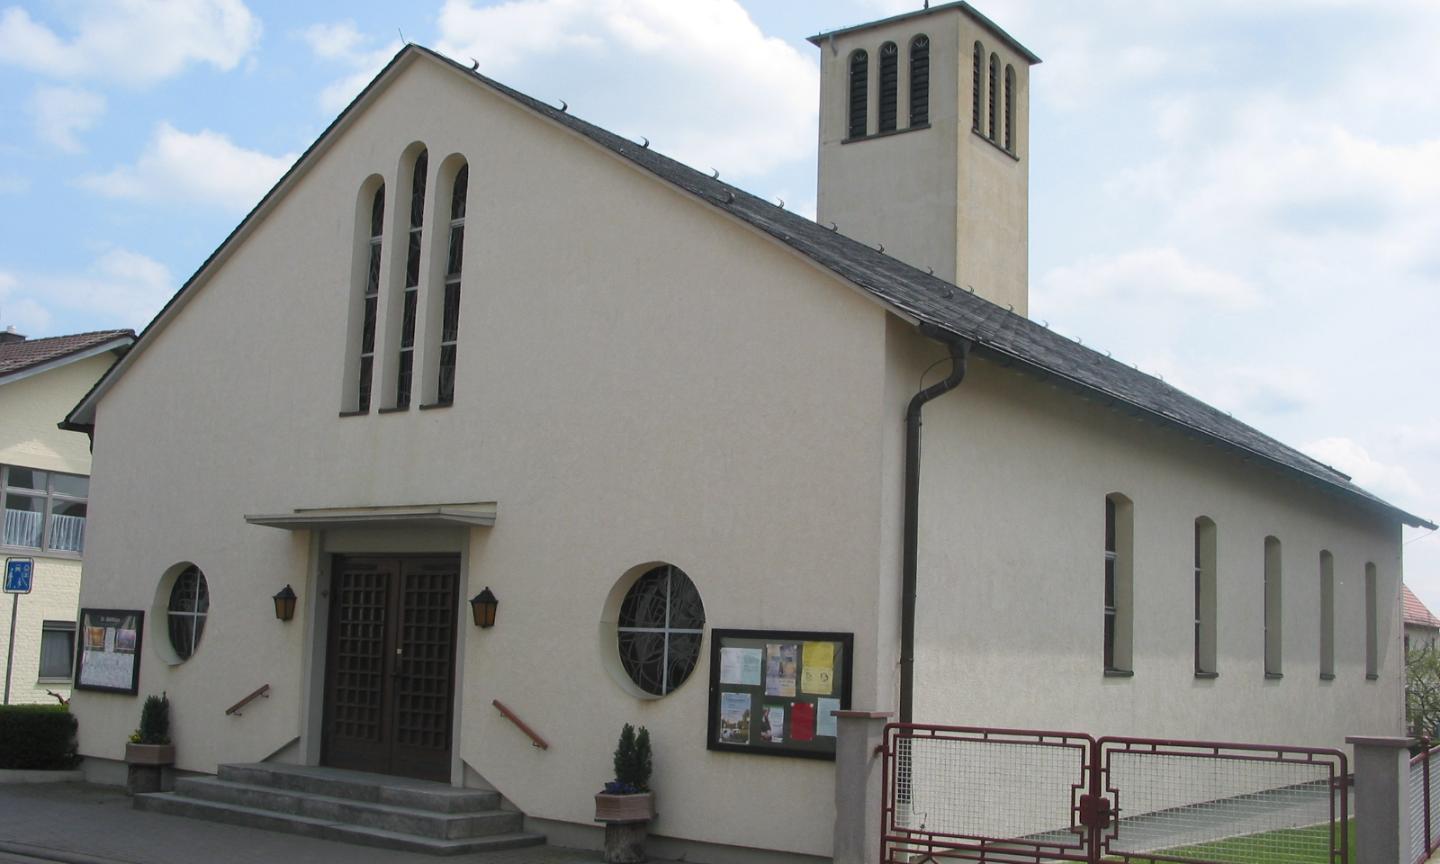 St. Matthäus Holzheim